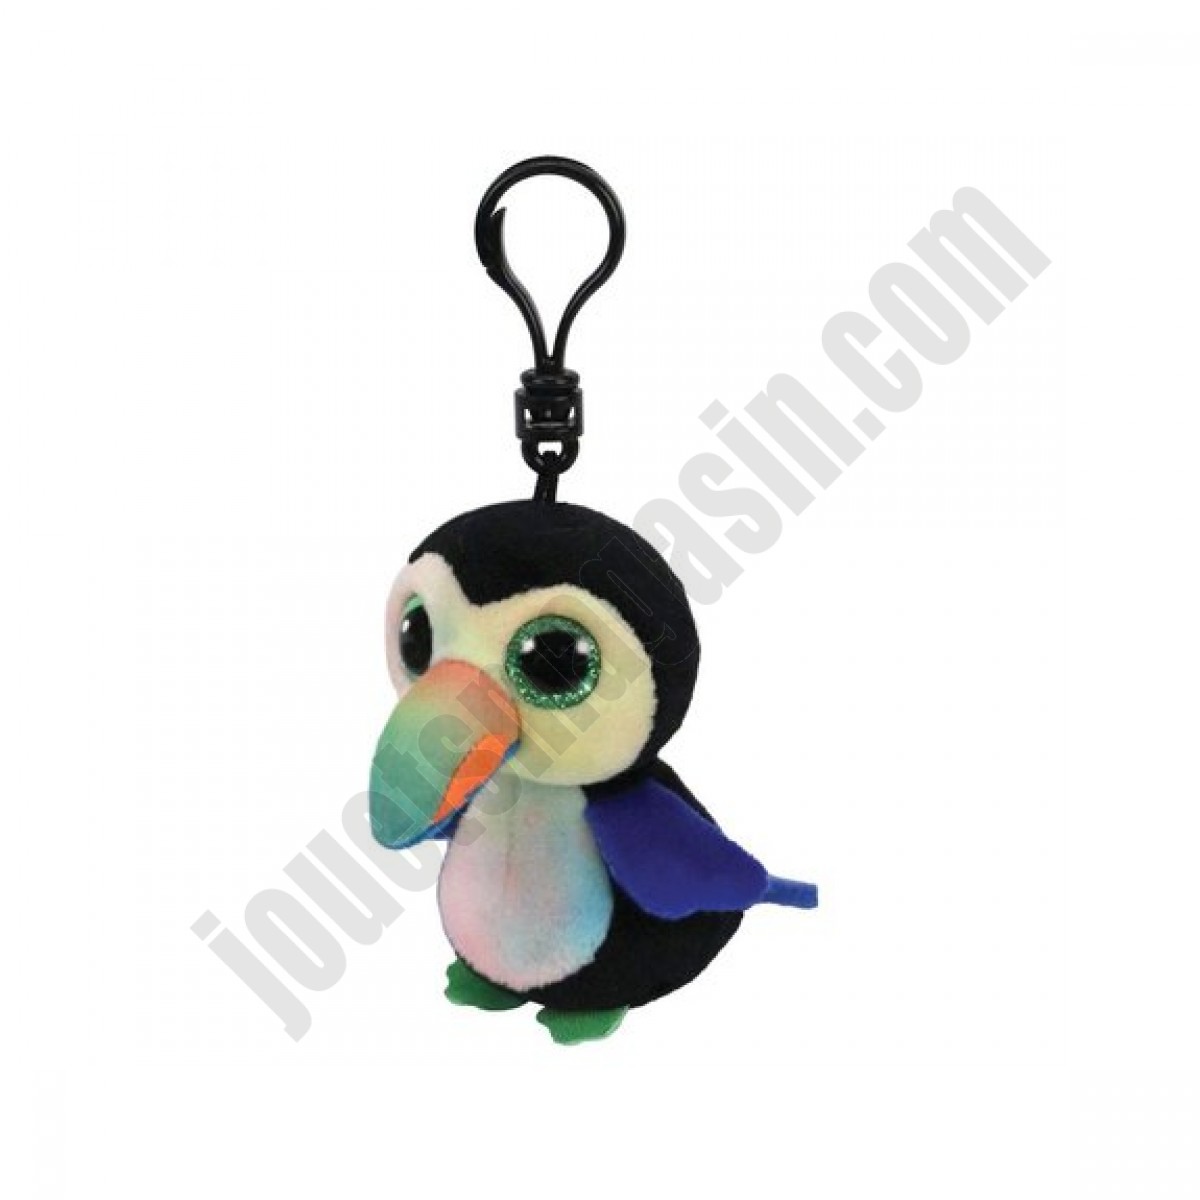 Beanie boo's porte clés - Beaks l'oiseau 8 cm ◆◆◆ Nouveau - Beanie boo's porte clés - Beaks l'oiseau 8 cm ◆◆◆ Nouveau